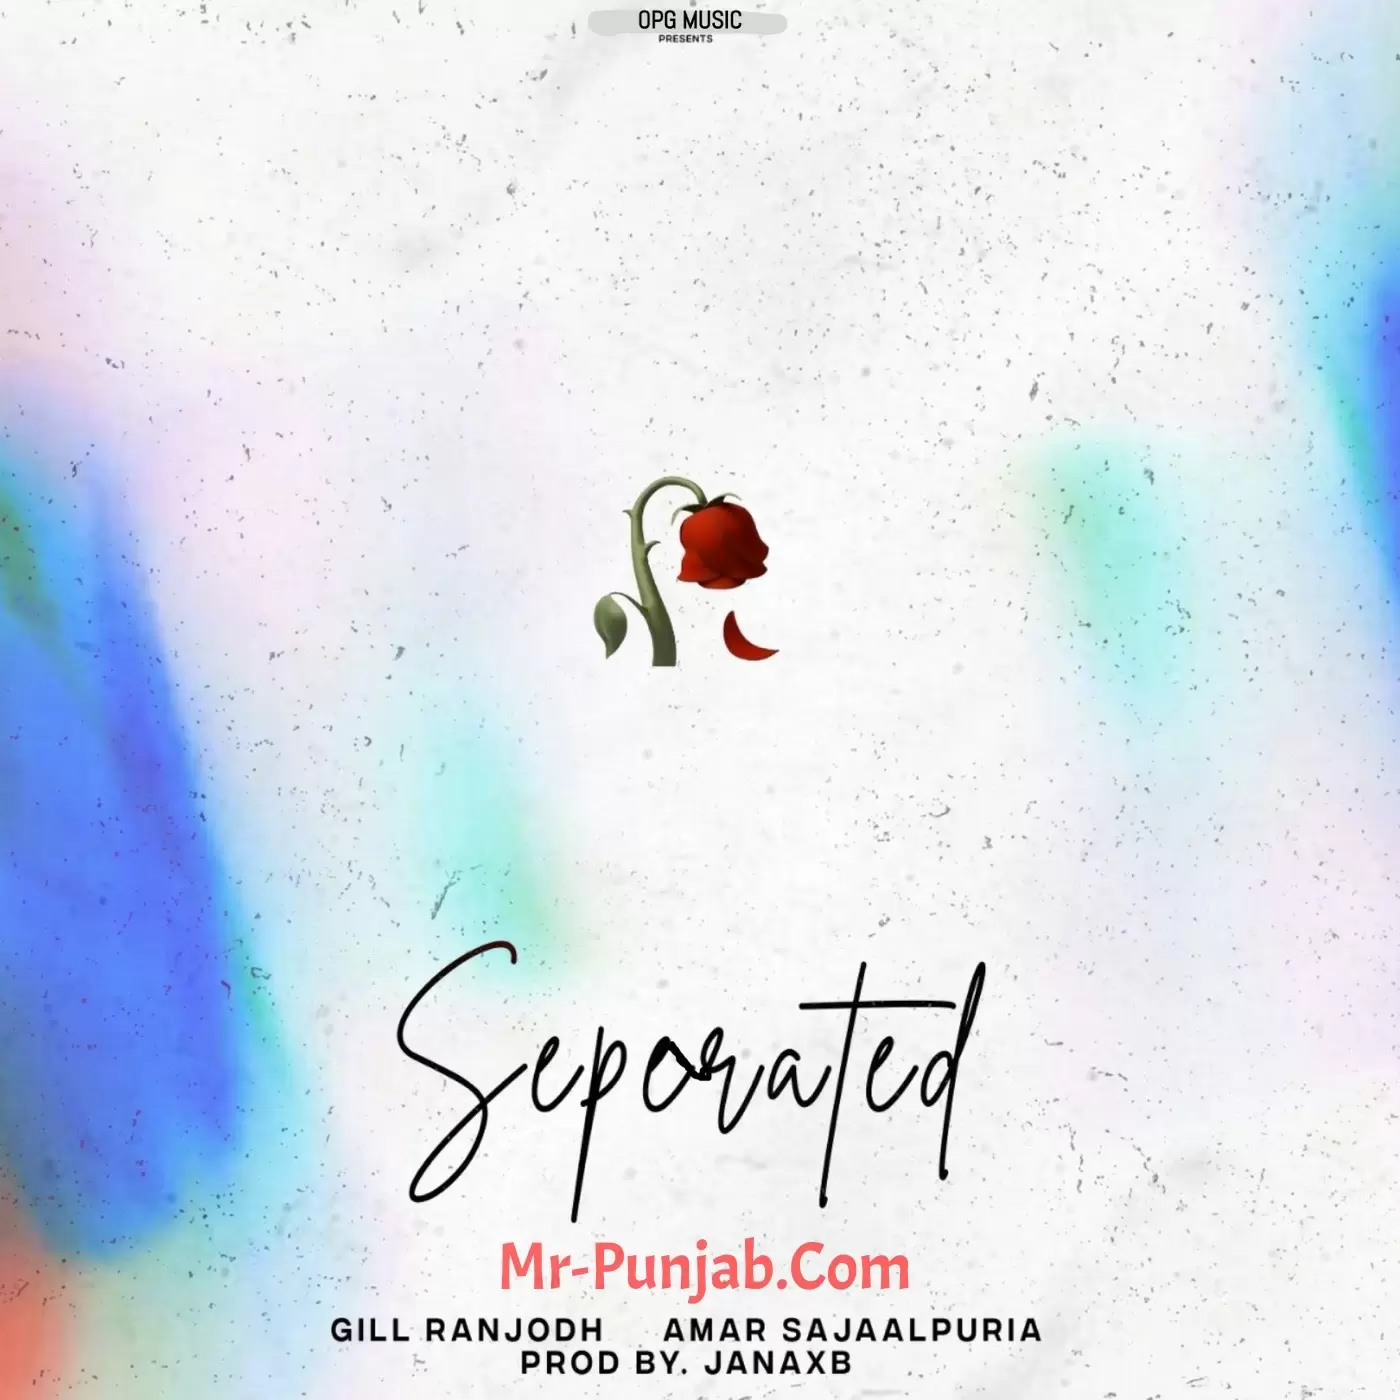 Separated Gill Ranjodh Mp3 Download Song - Mr-Punjab